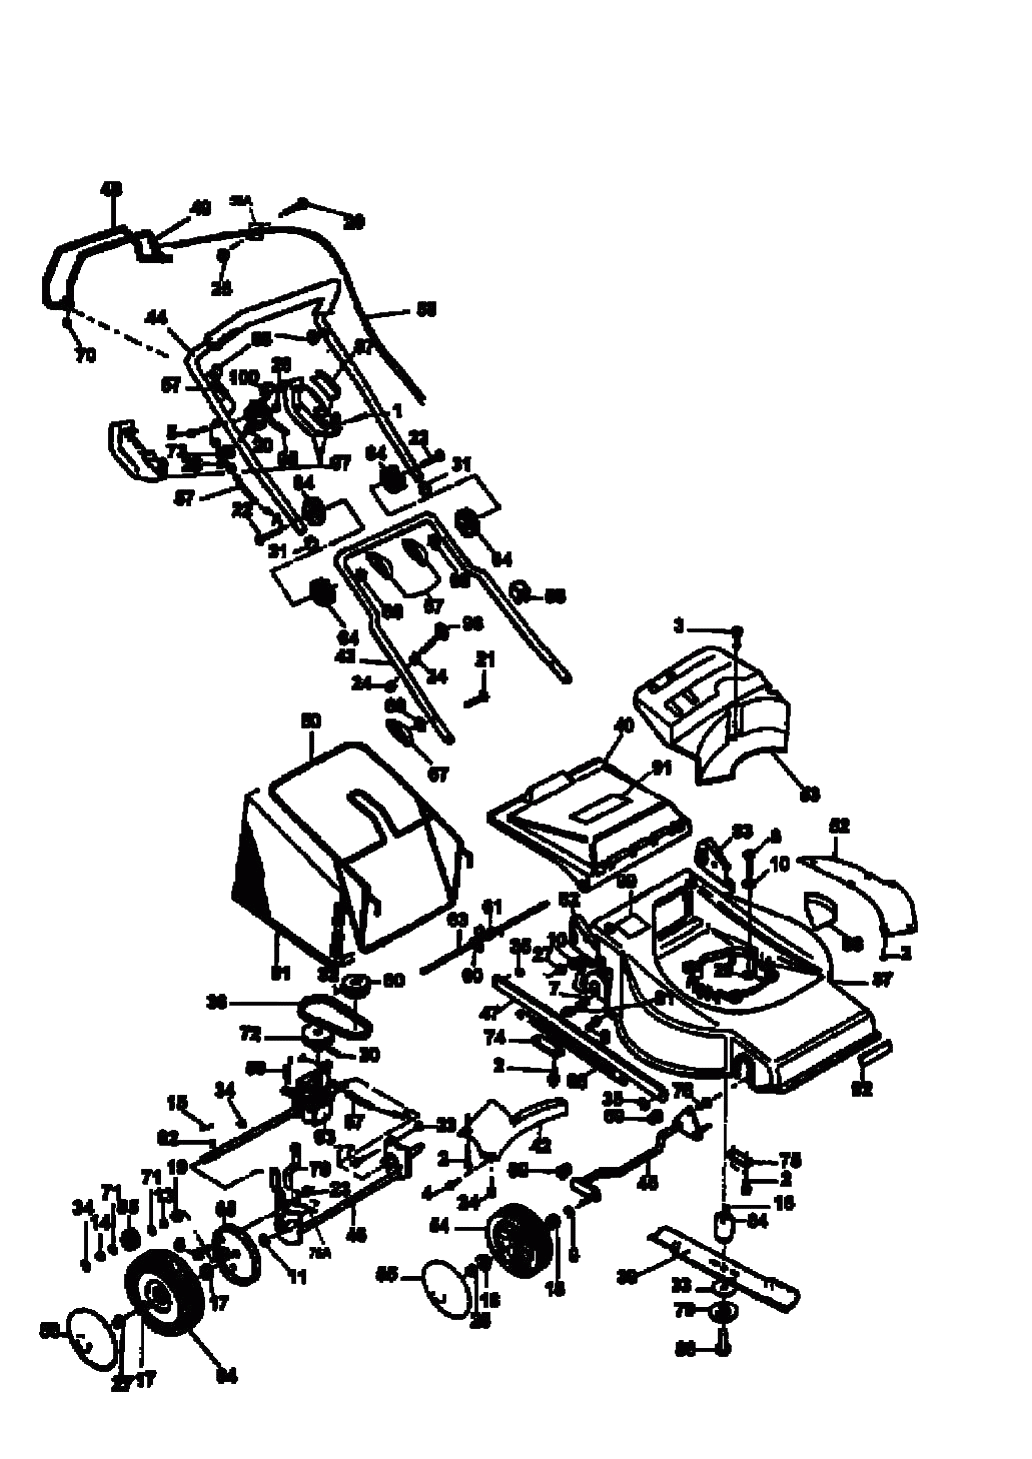 MTD Артикул GX56SBVV678 (год выпуска 1998). Основная деталировка